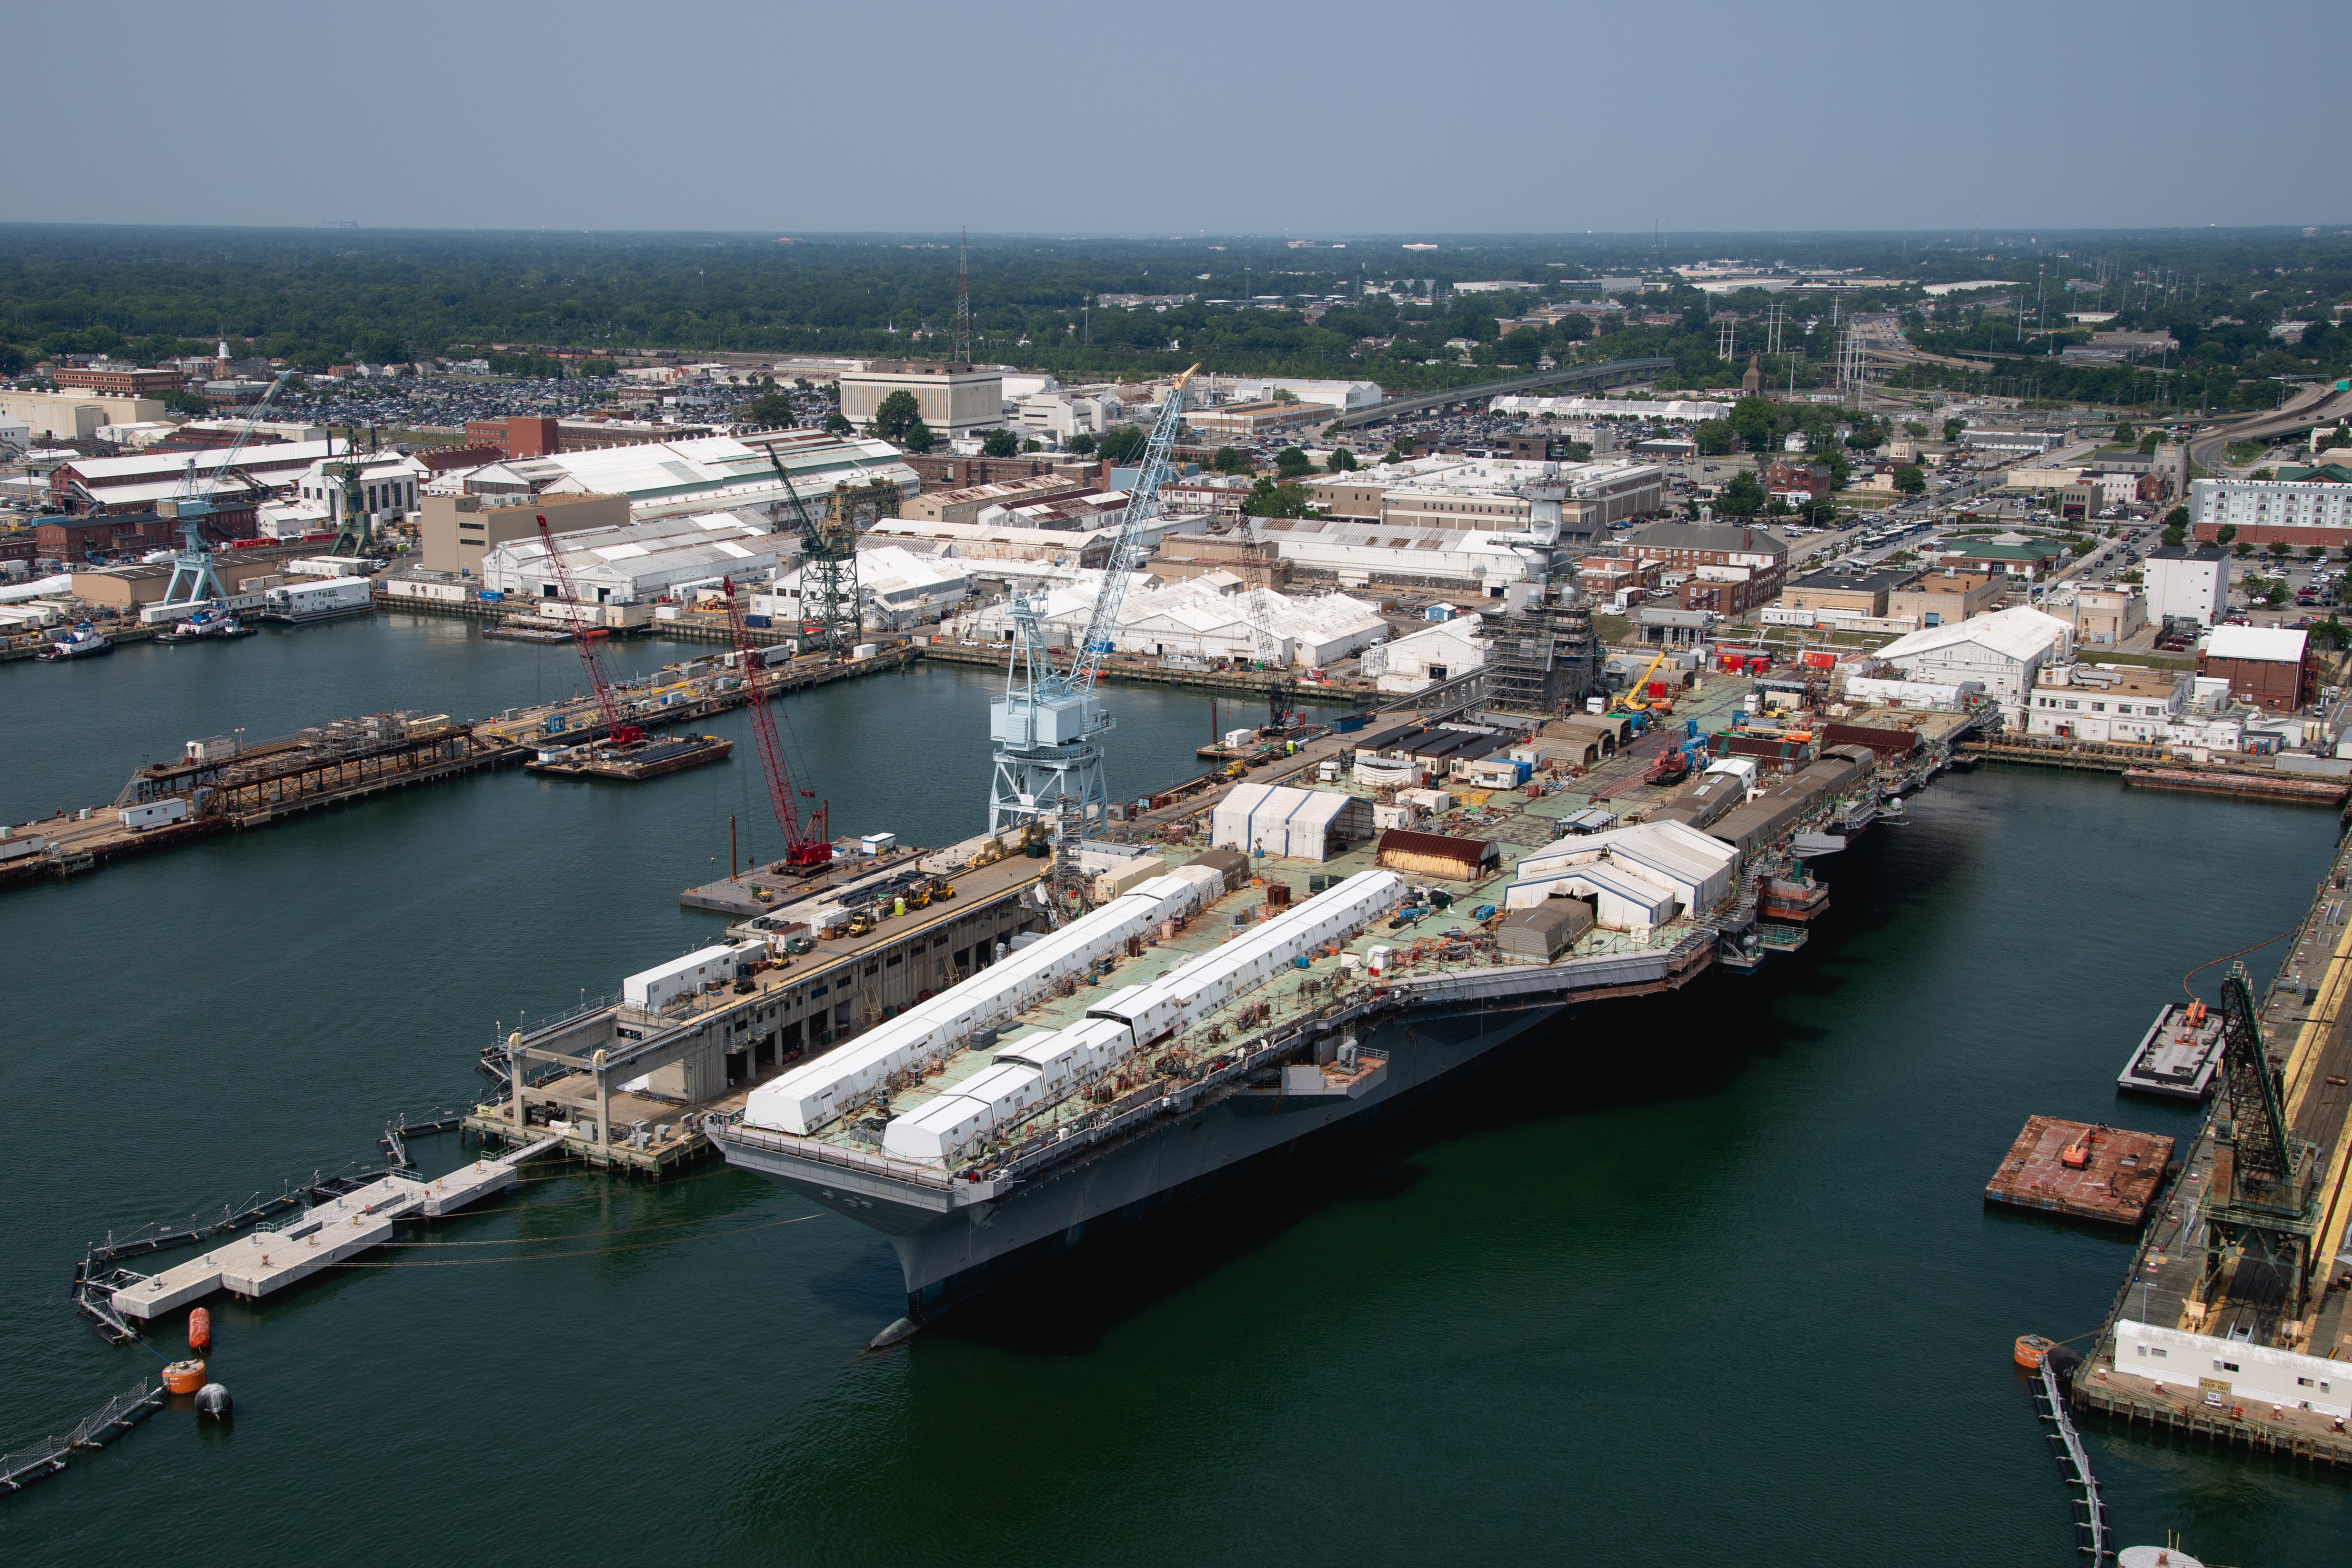 HII's Newport News Shipyard Aerial